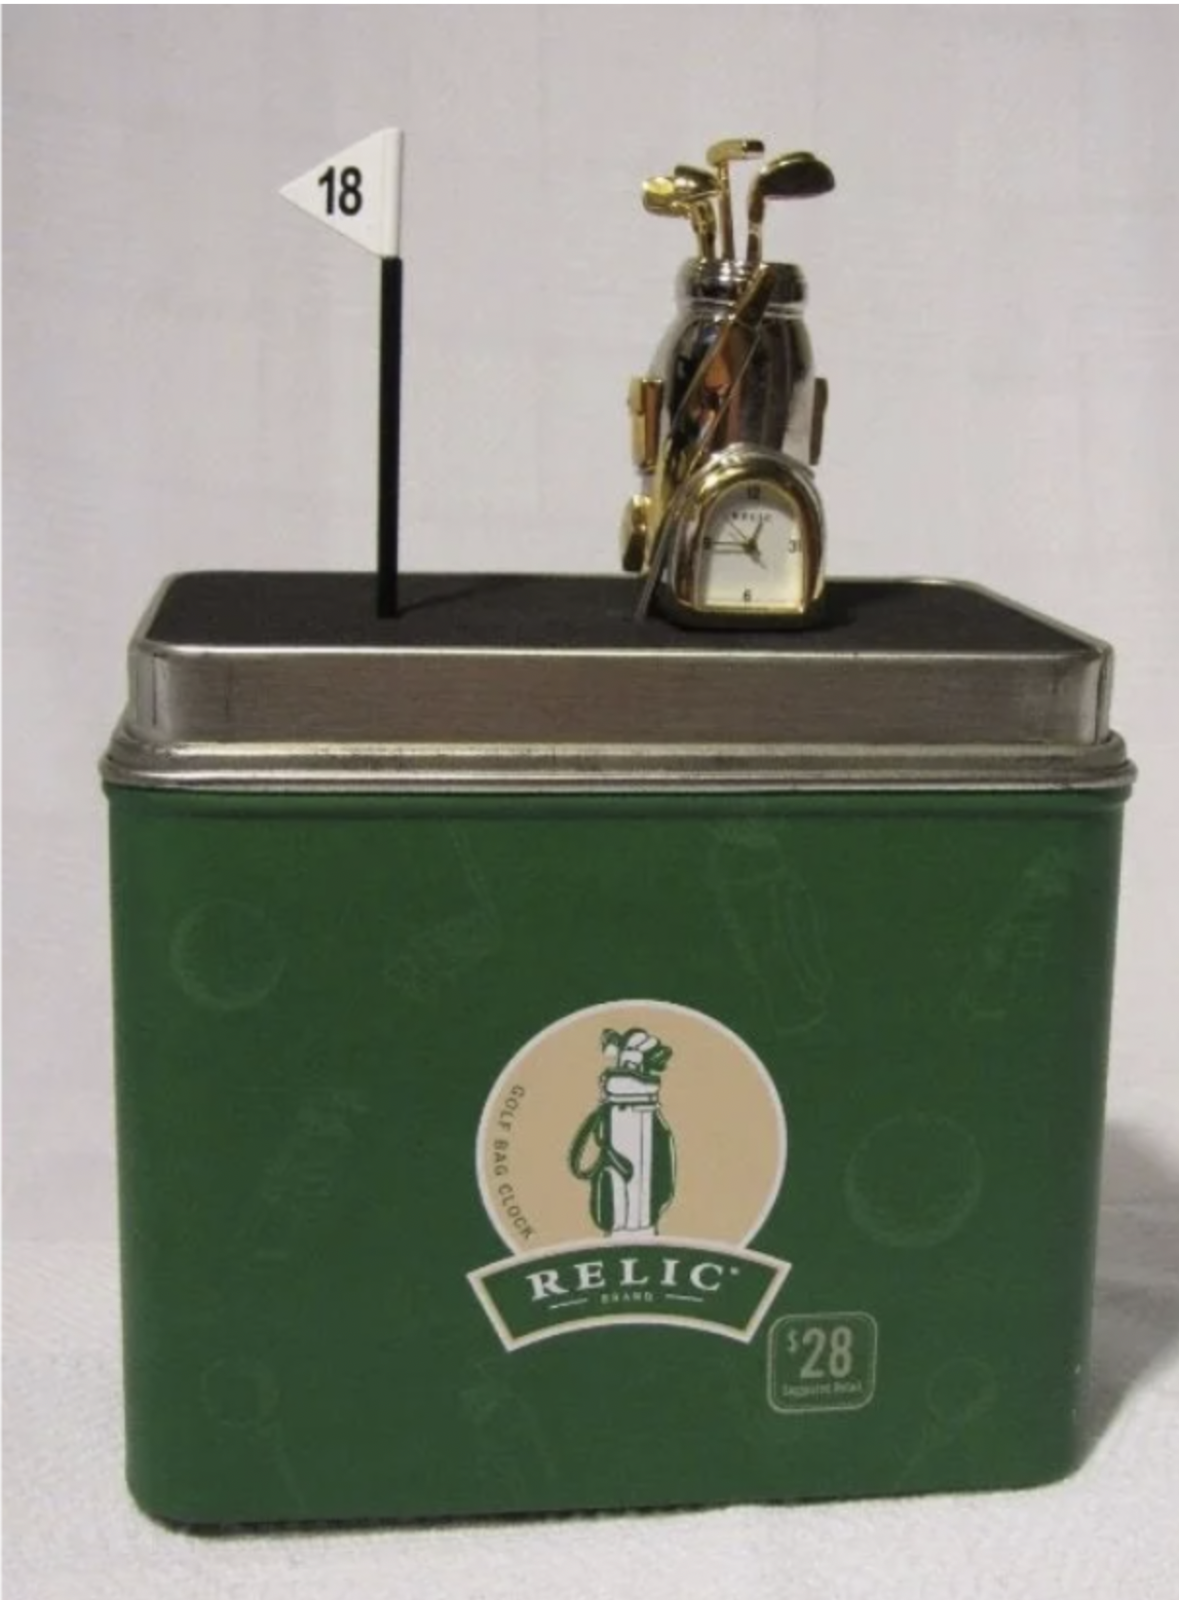 Relic Golf Bag Clock - $25.99